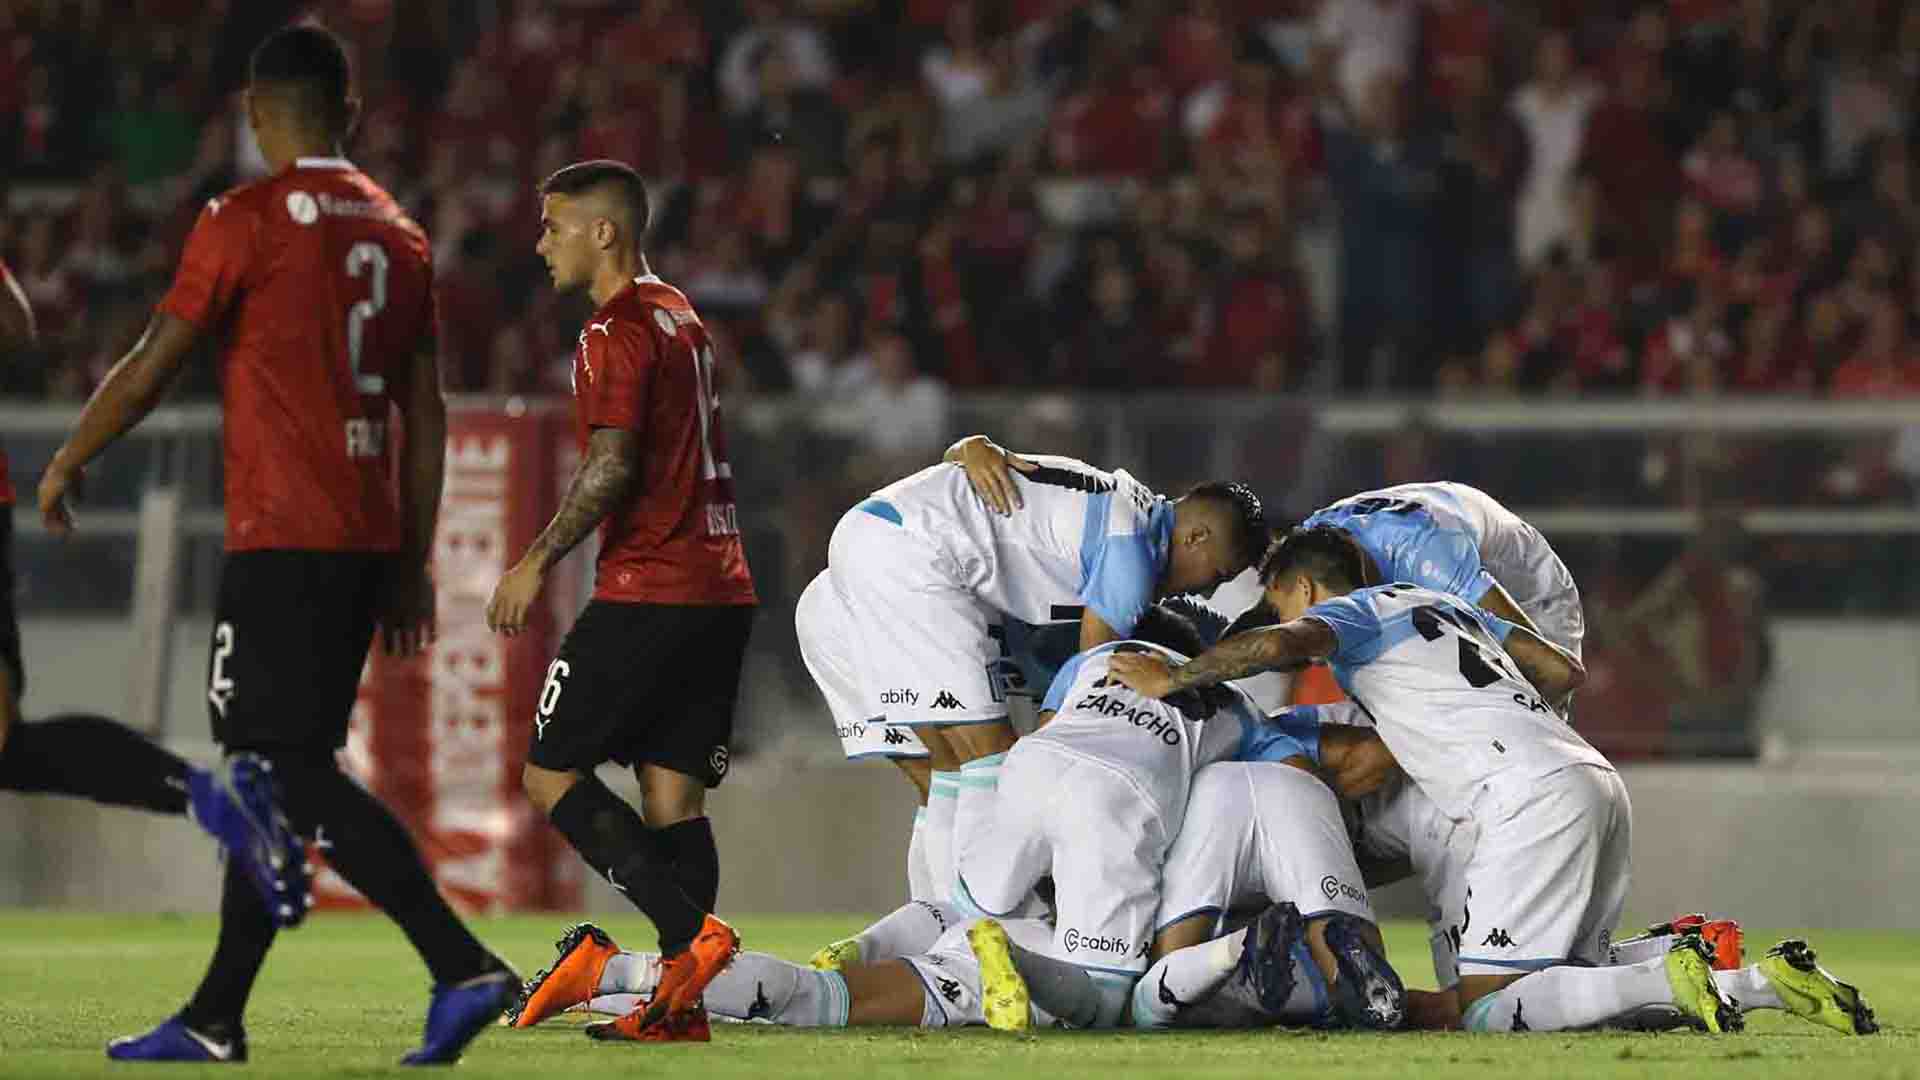 Independiente Rivals